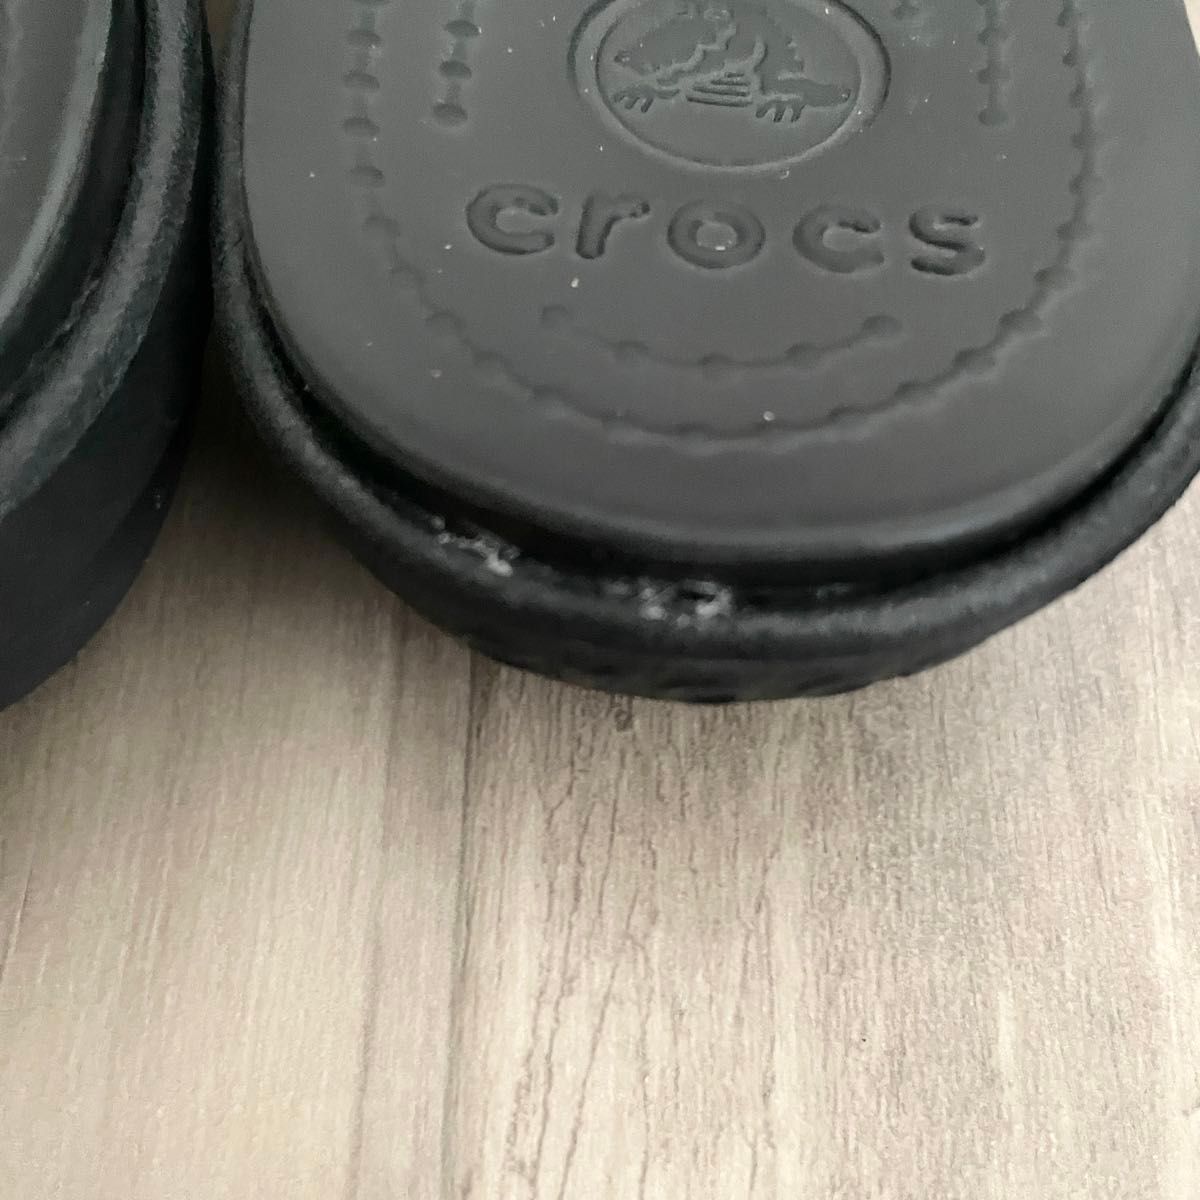 【crocs】 クロックス サンダル ミュール レディース 黒 ブラック 匿名配送 夏靴 25.0